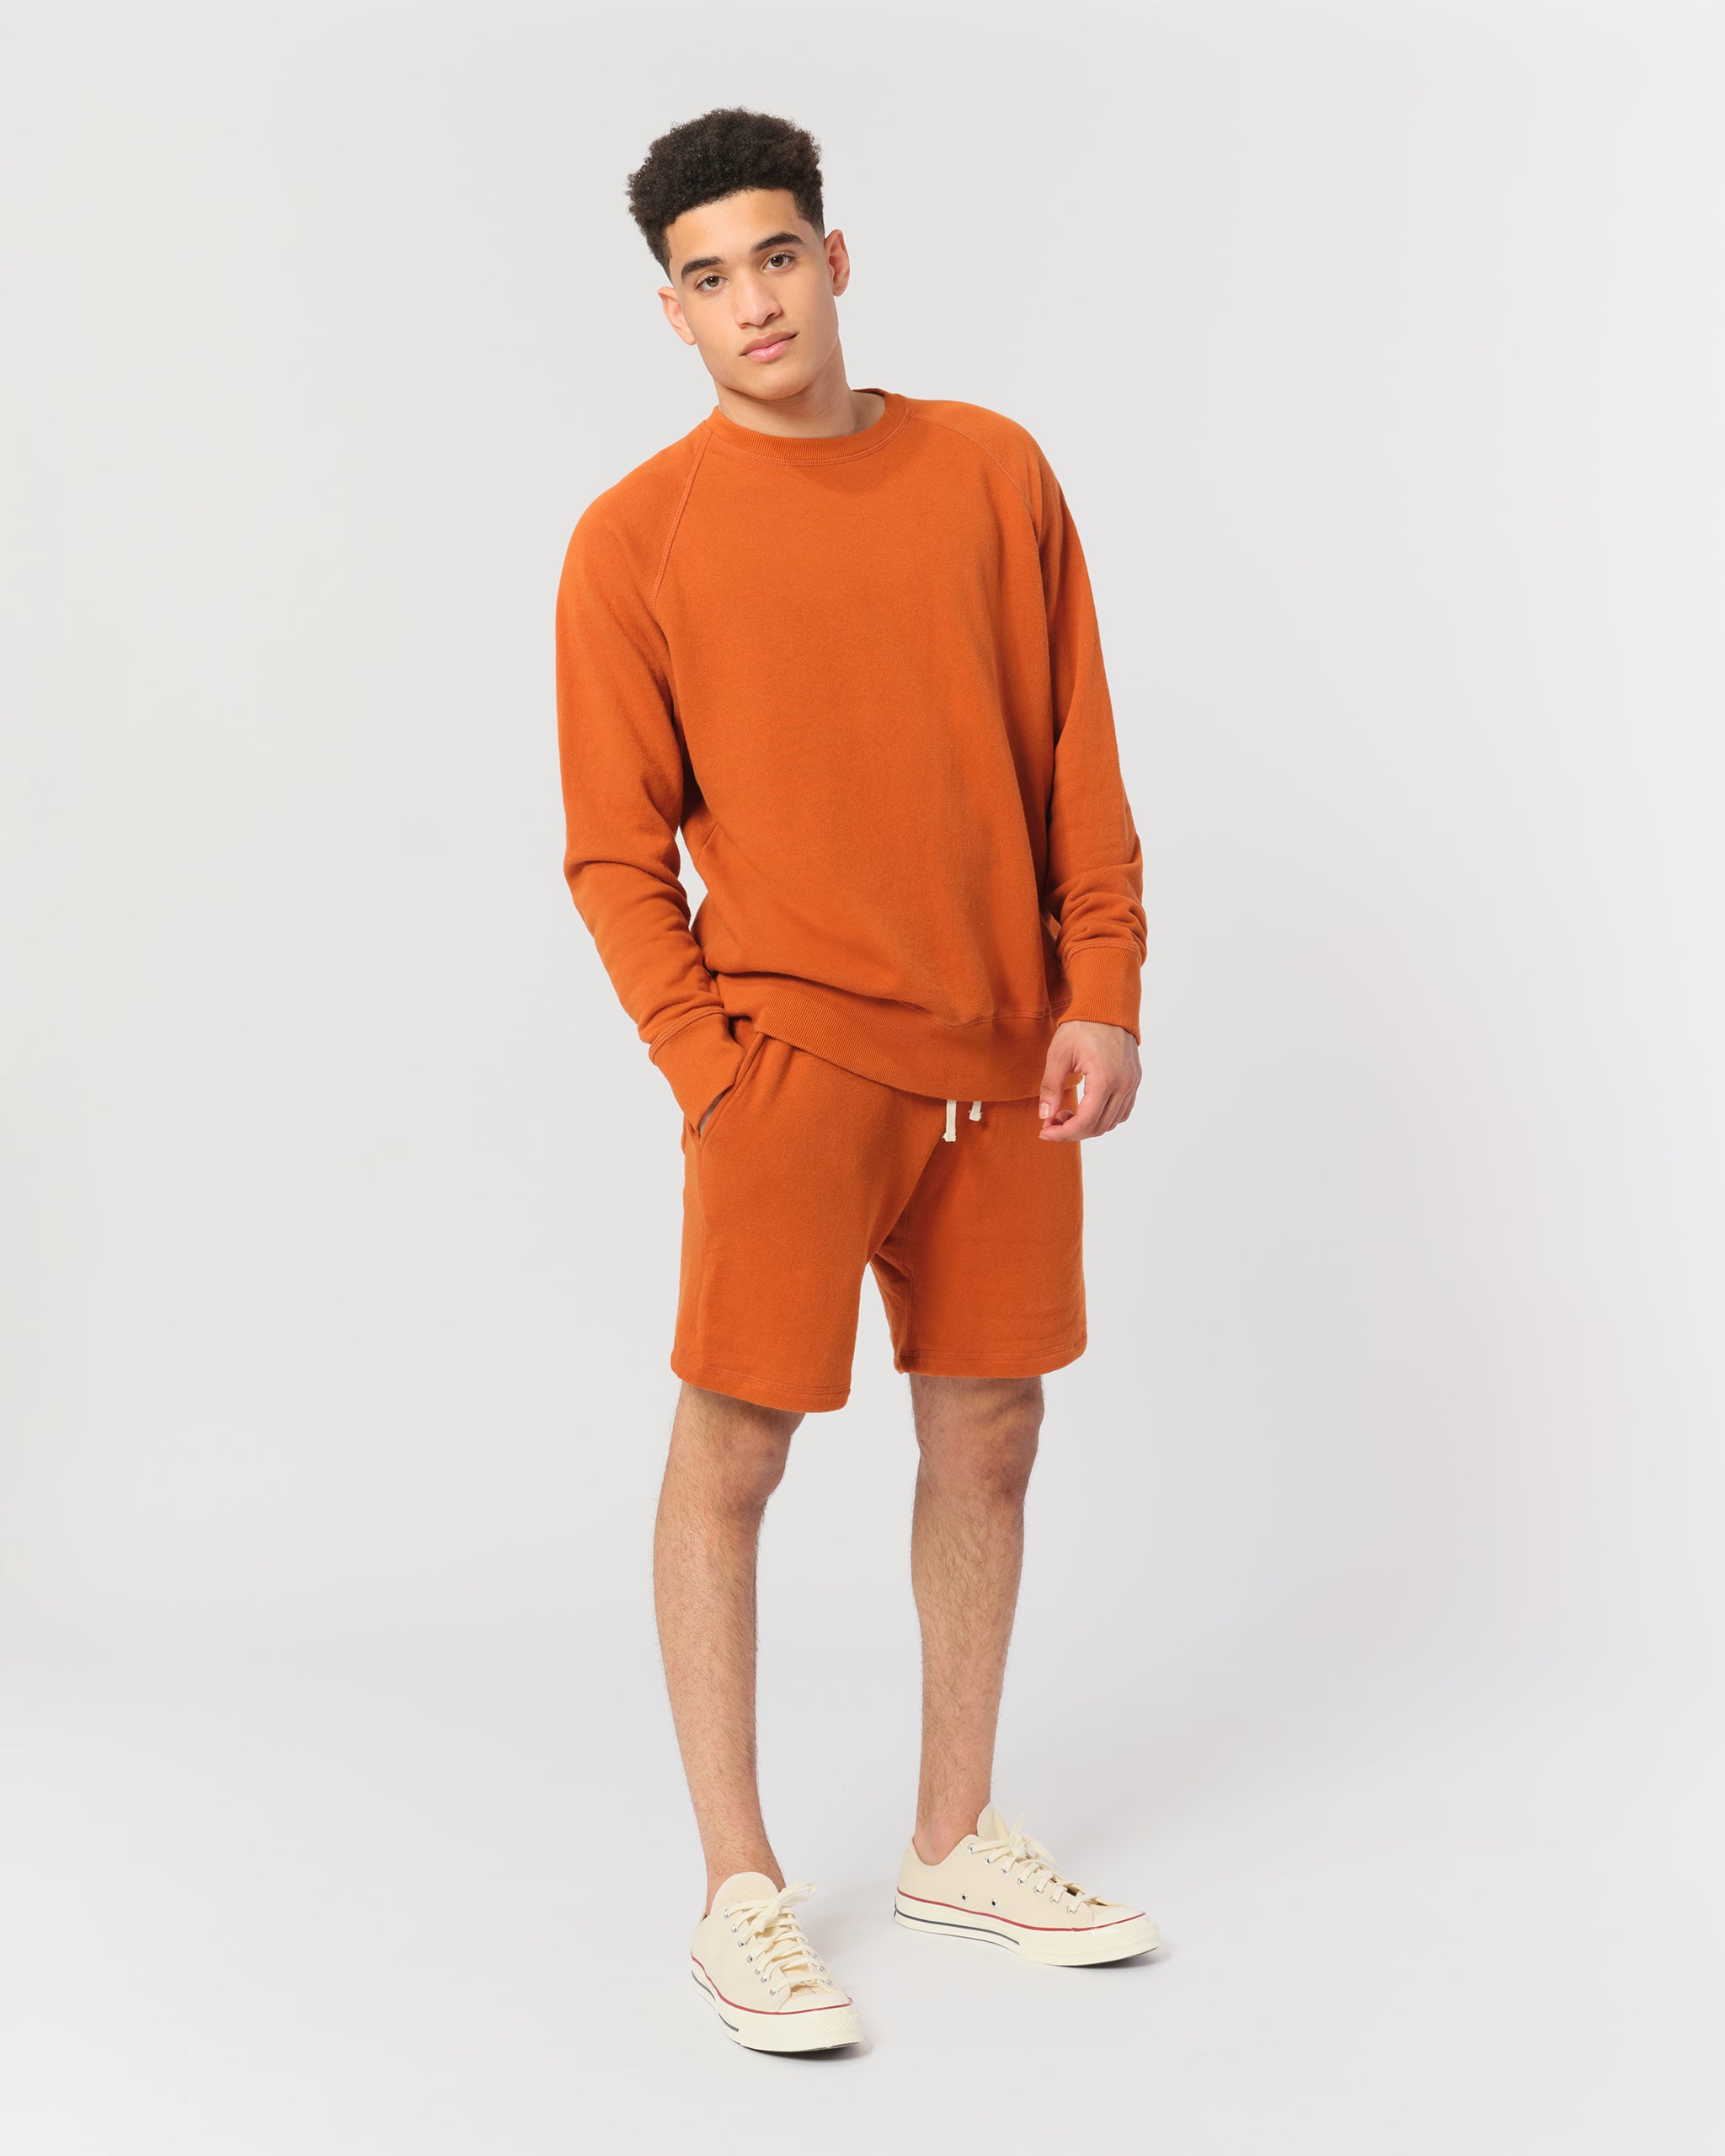 model wearing Orange french terry sweat shorts